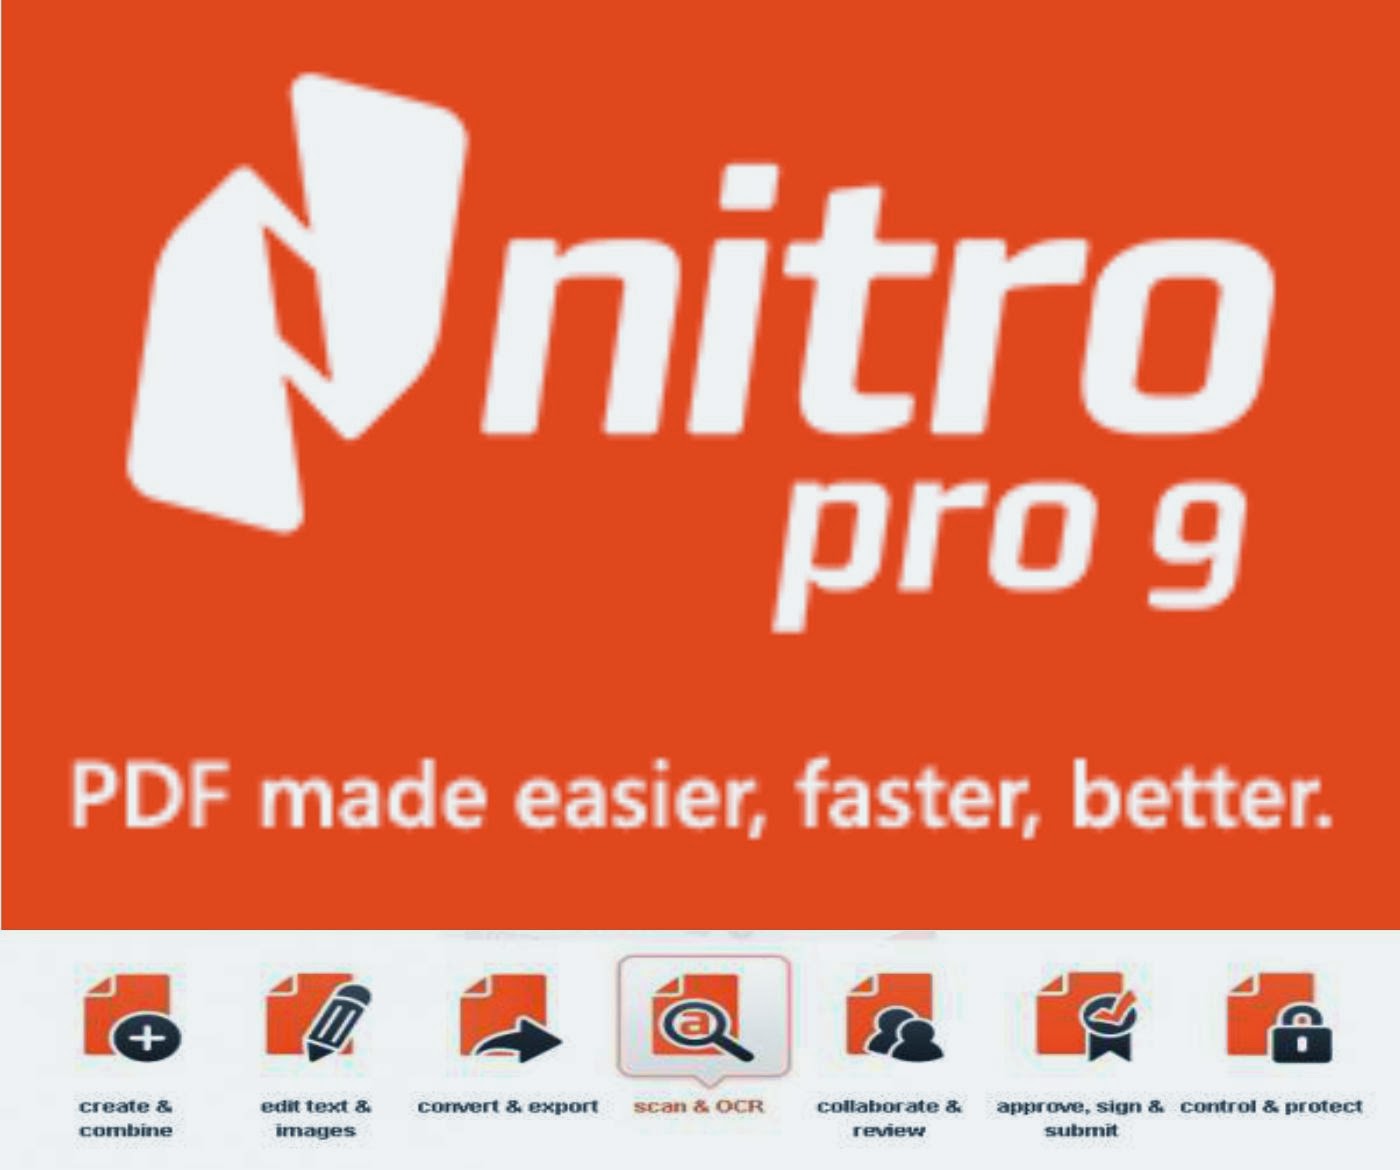 Free download nitro pro 9 for windows 10